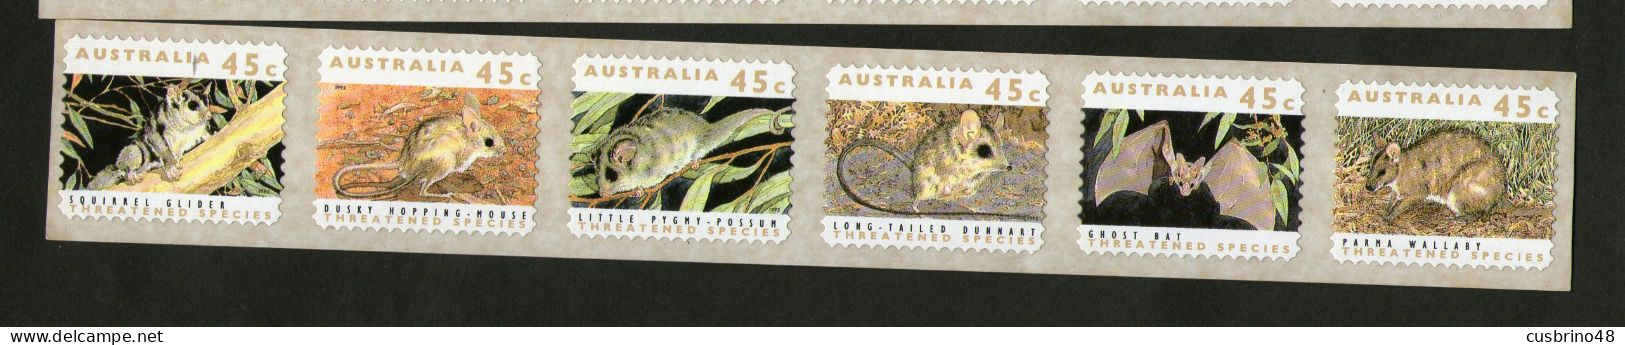 AUSTRALIA 1992 P & S Strip 45c Endangered Species Strip 6 PRINTSET 1 Koala Reprint. - Lot  AUS 236 - Mint Stamps